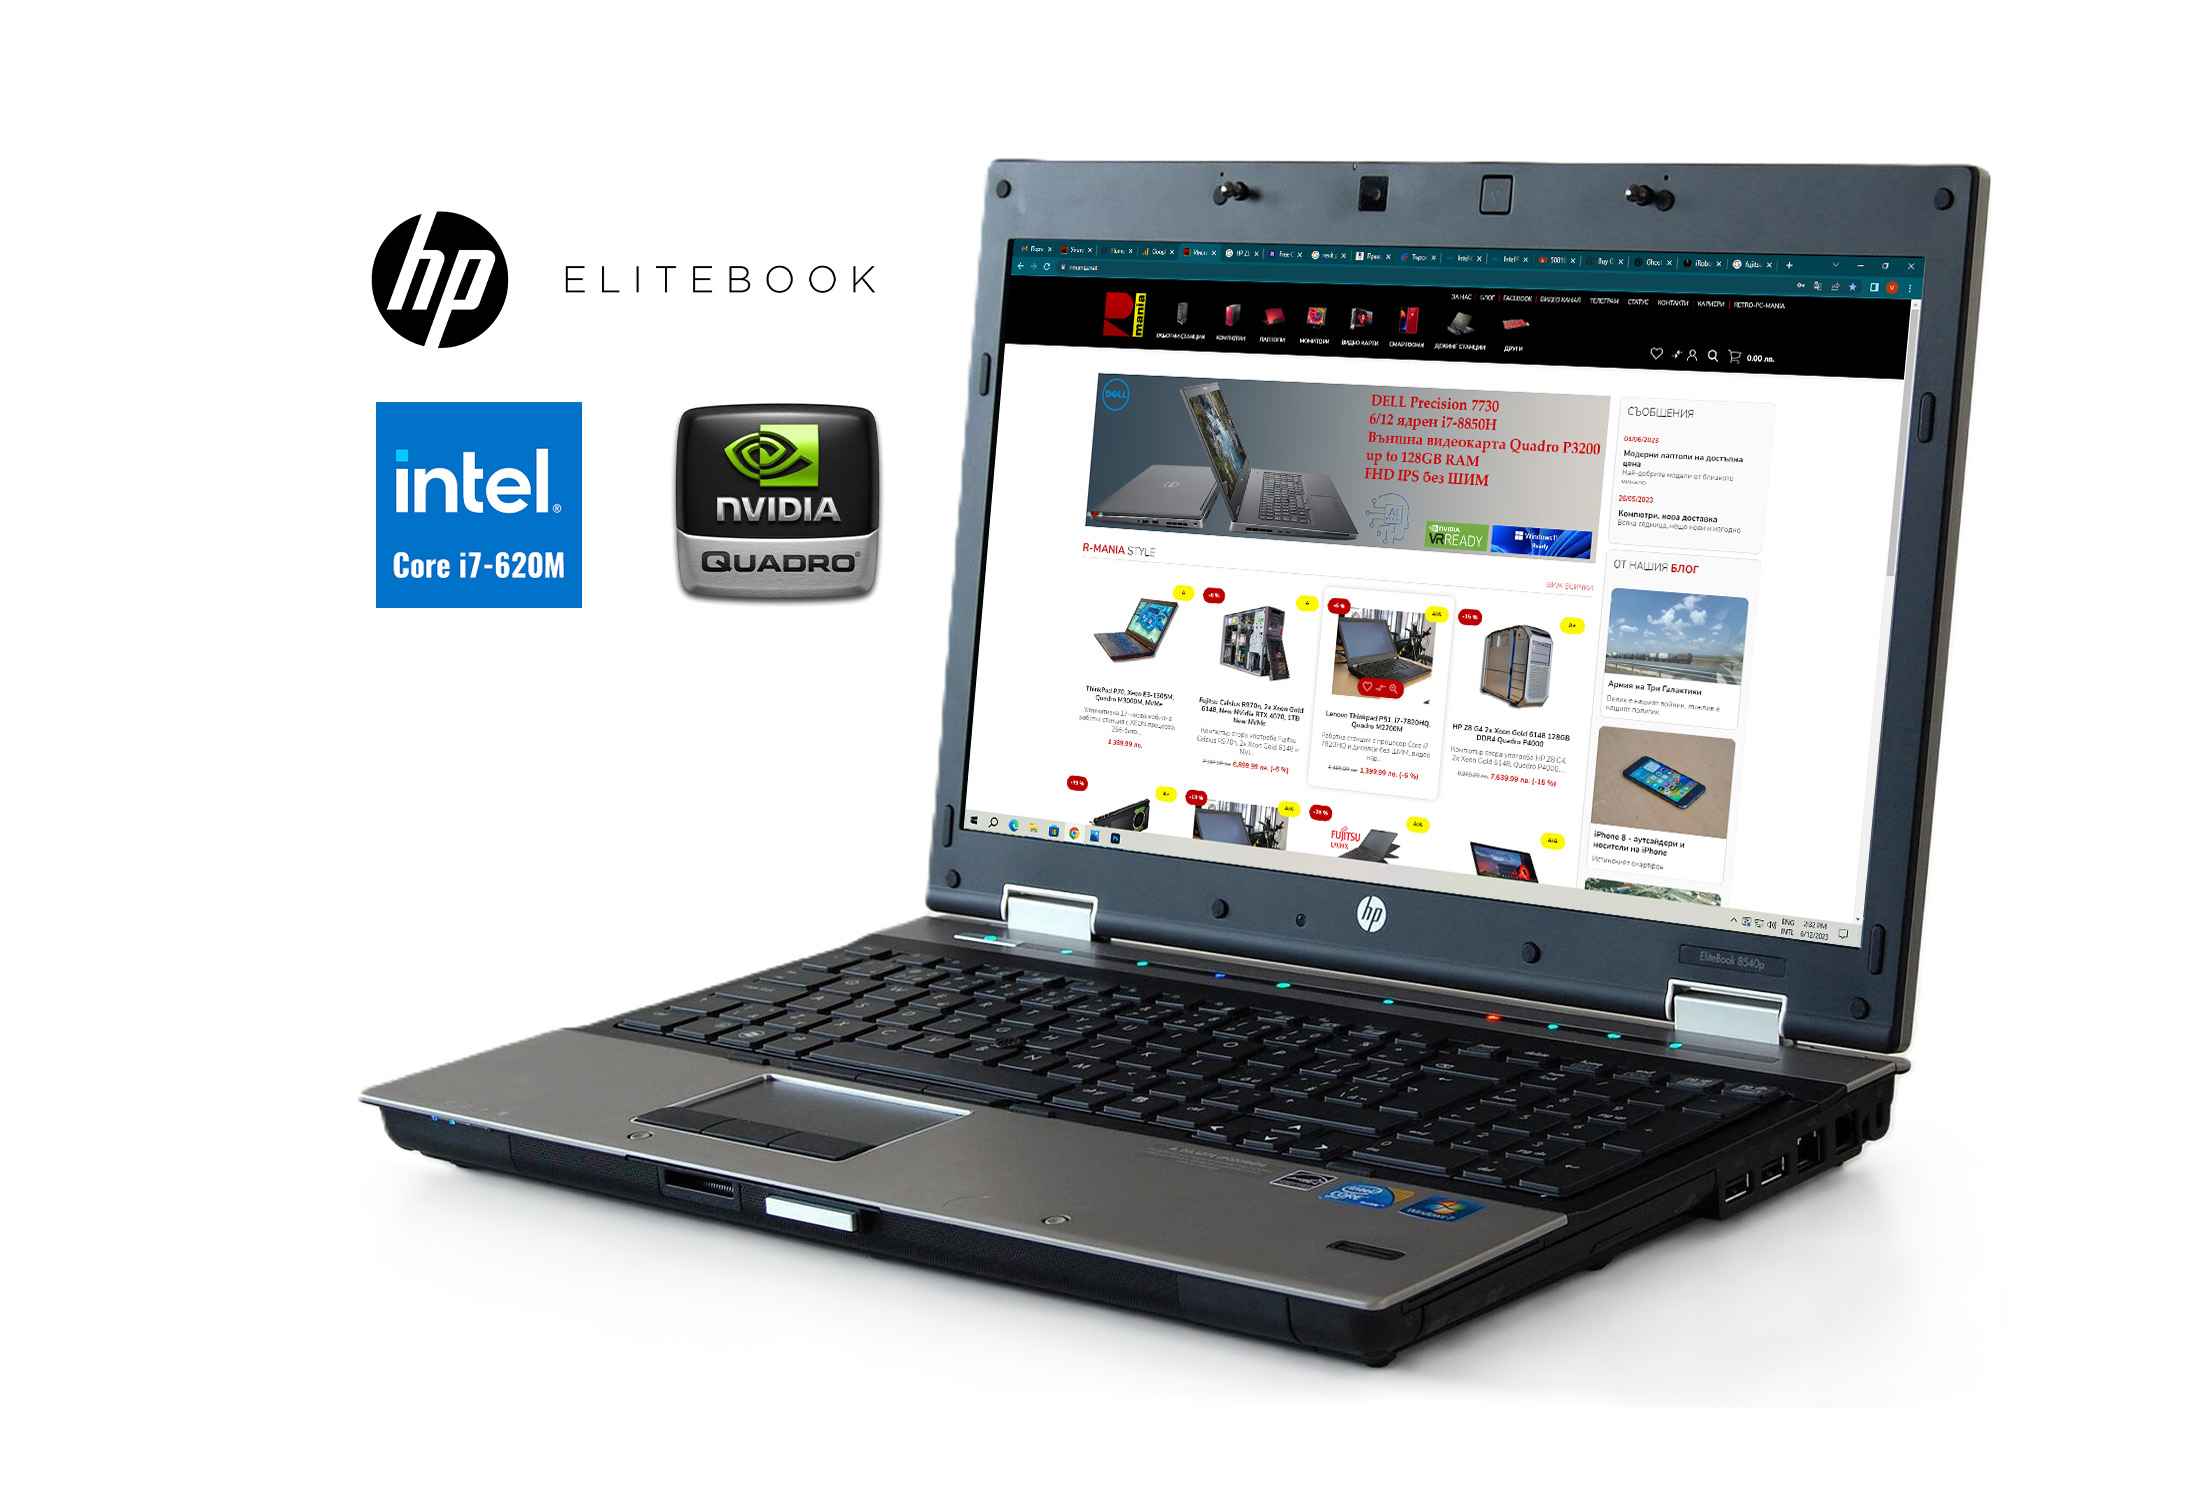 HP Elitebook 8540p  core i7-620M  Quadro NVS 5100M  Camera